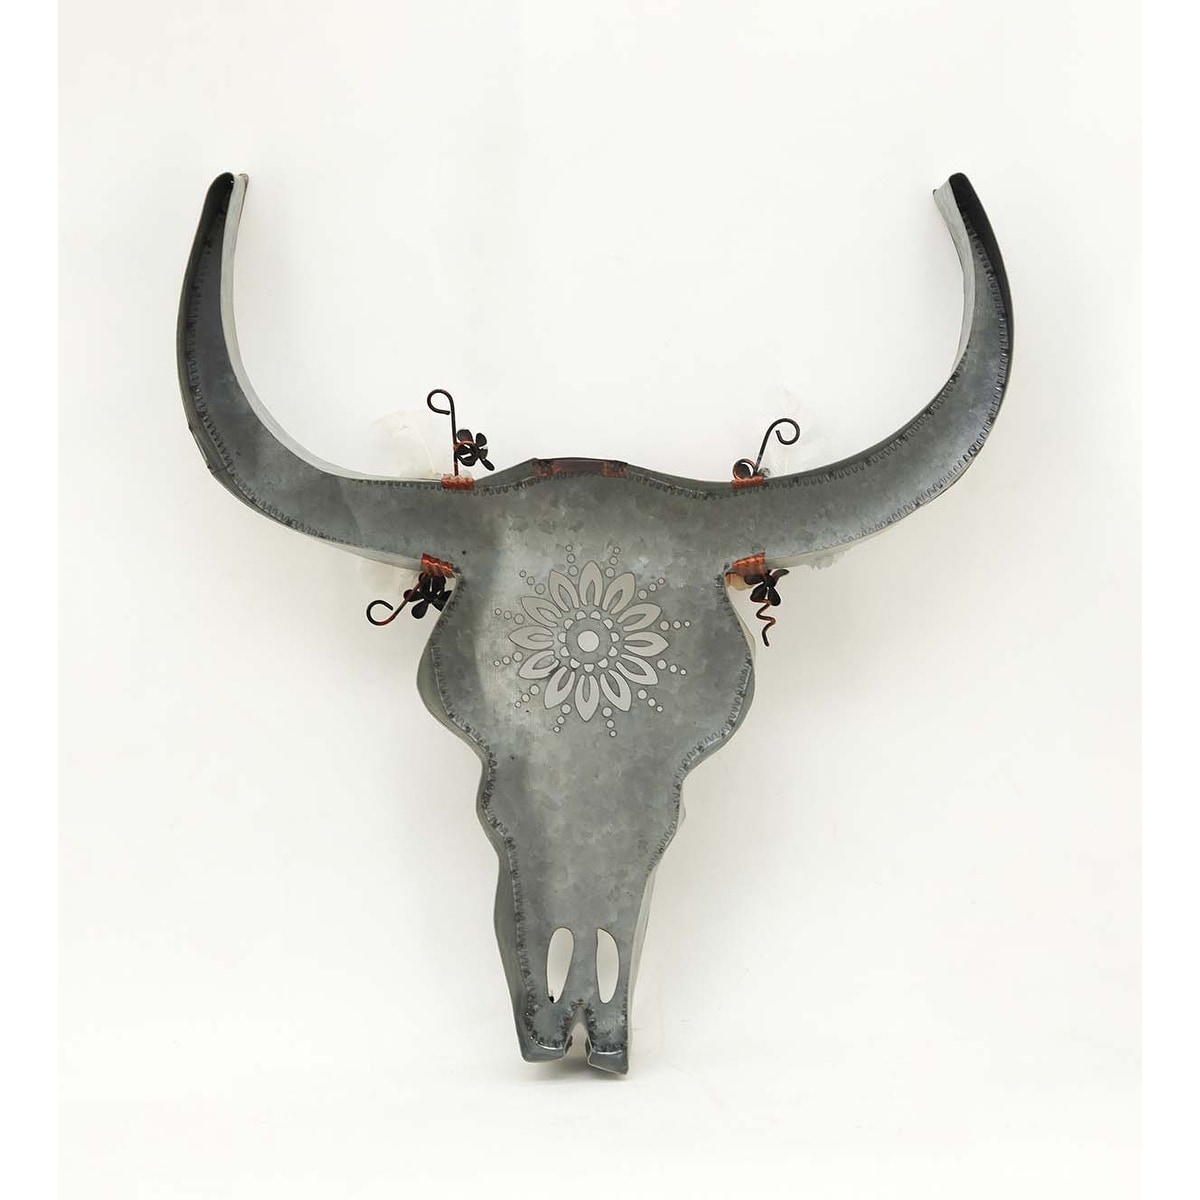 Galvanized Metal Floral Bull Head or Skull Wall Sculpture